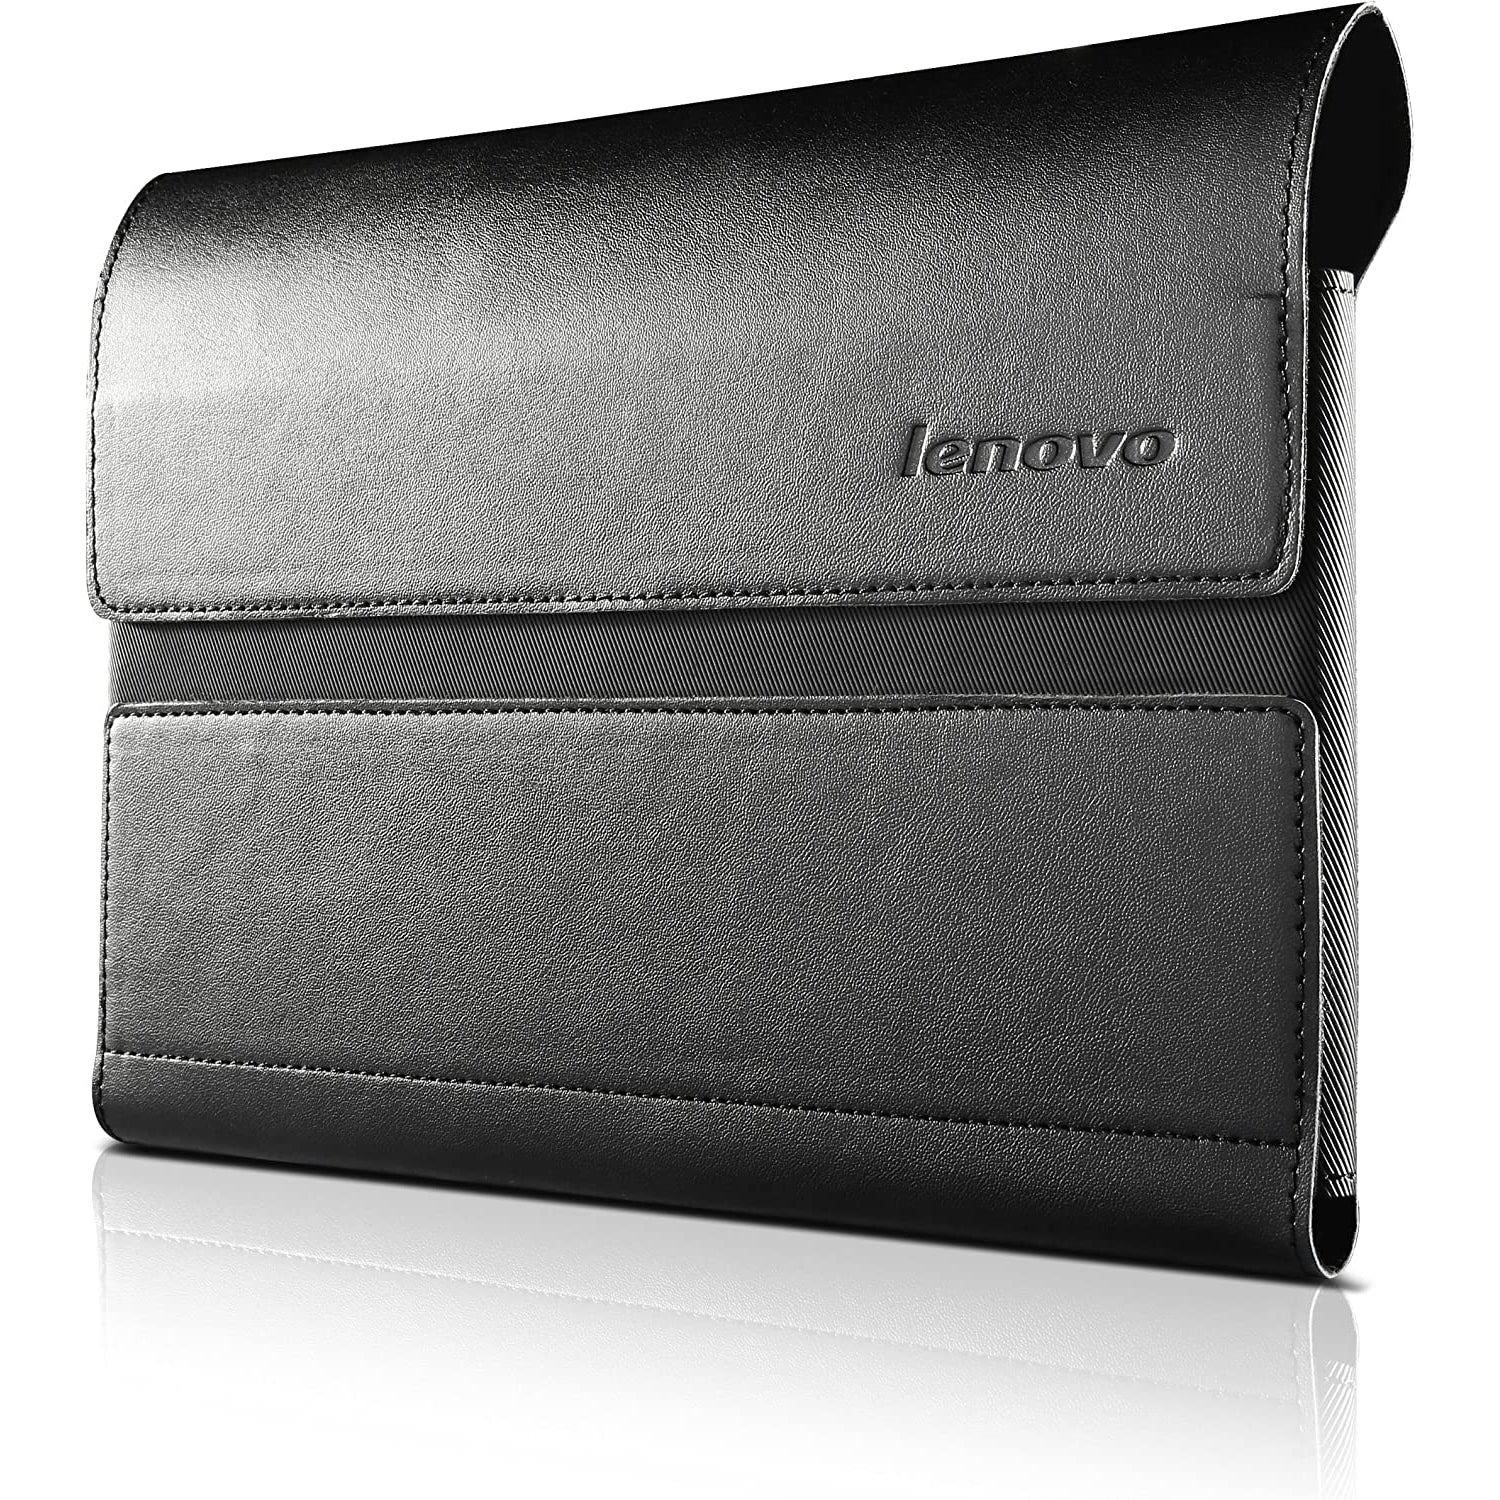 Lenovo Sleeve and Film for 8 inch Yoga Tablet - Black - Refurbished Good